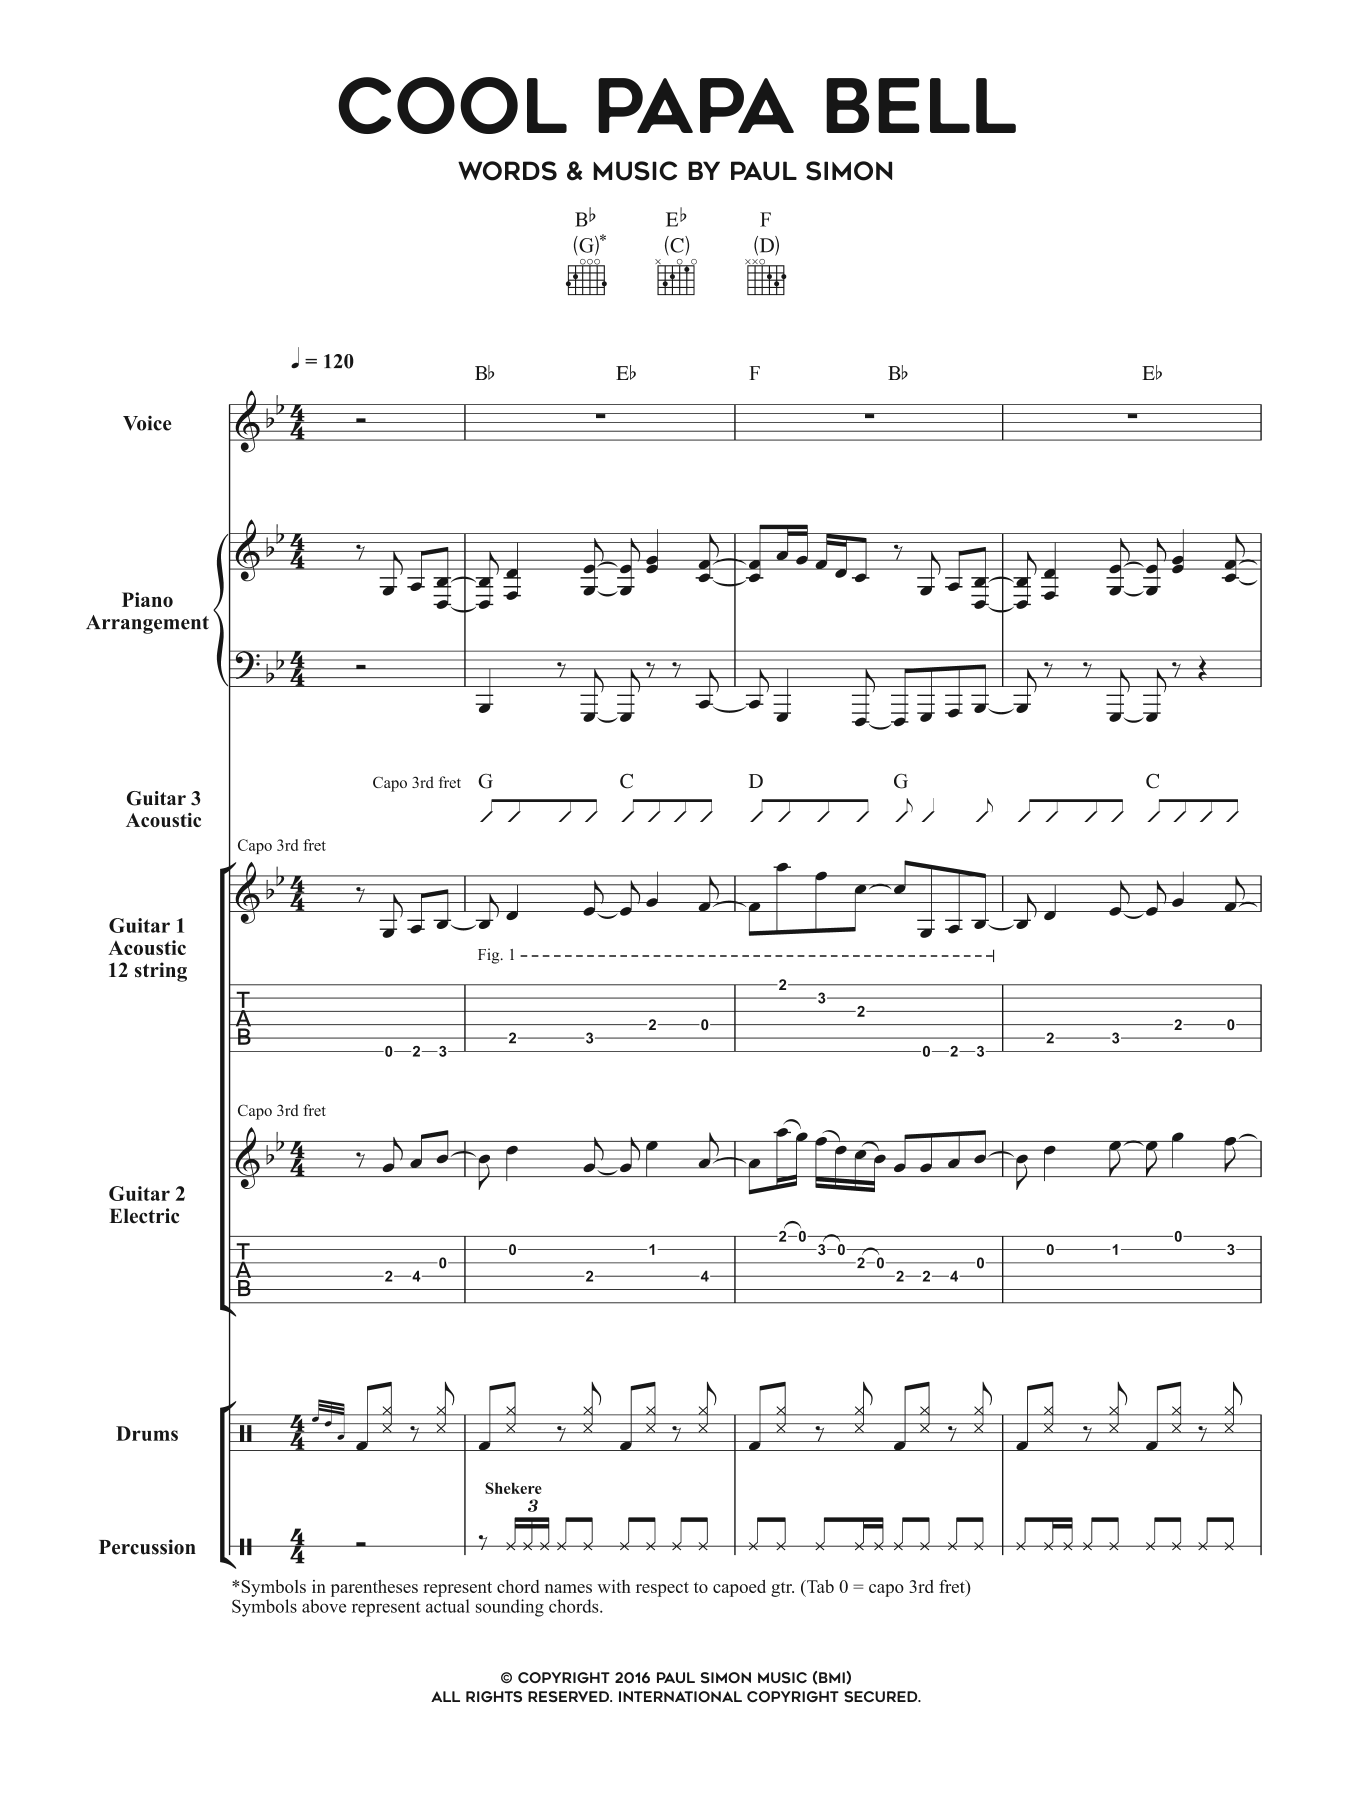 Paul Simon Cool Papa Bell sheet music notes printable PDF score